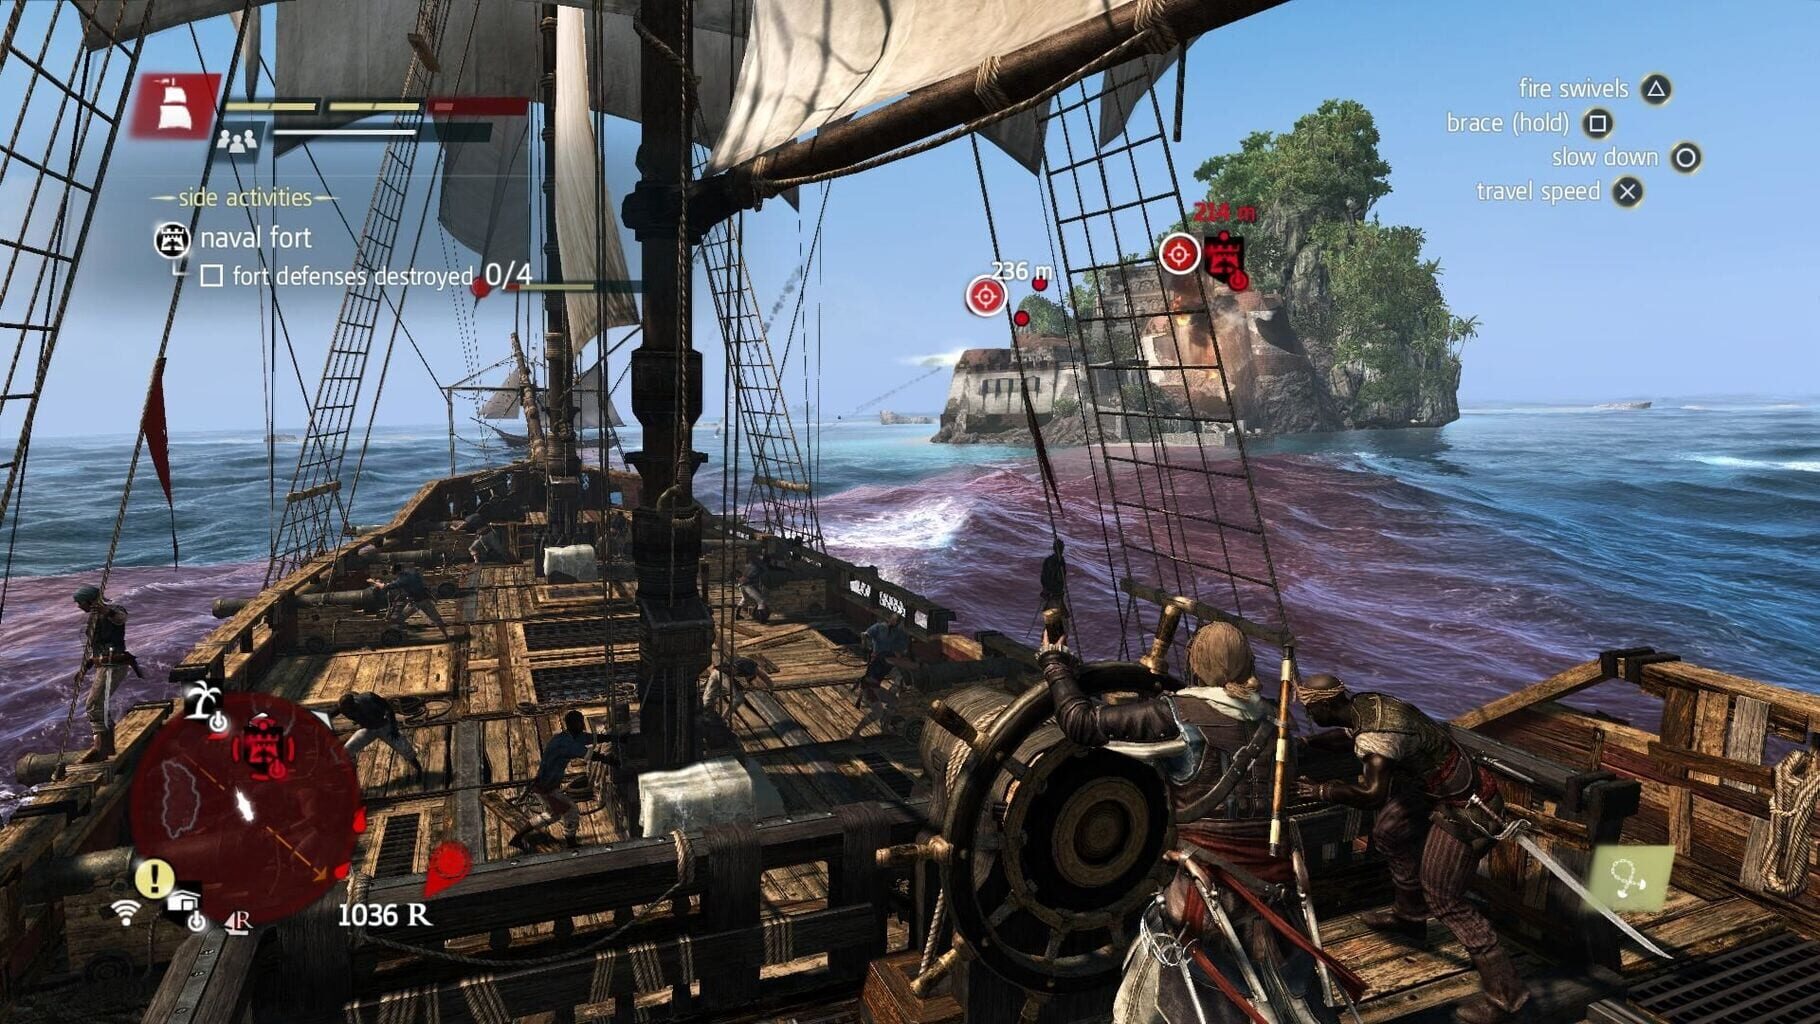 Captura de pantalla - Assassin's Creed IV Black Flag: Time Saver - Technology Pack